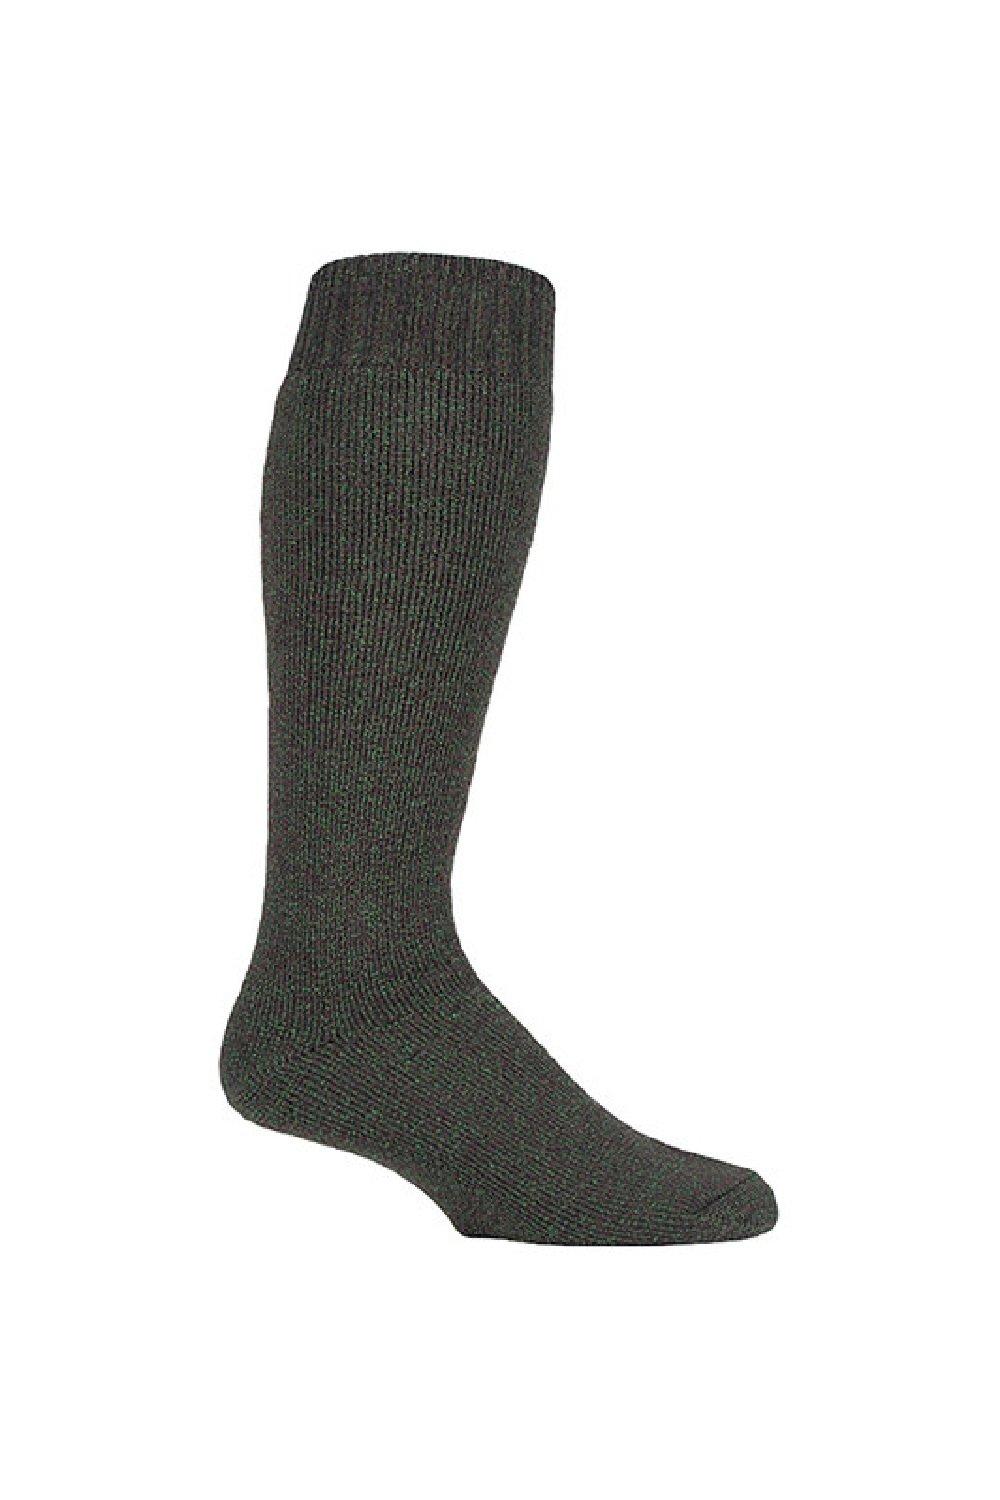 Green Long Wellington Boot Socks 6-11 UK